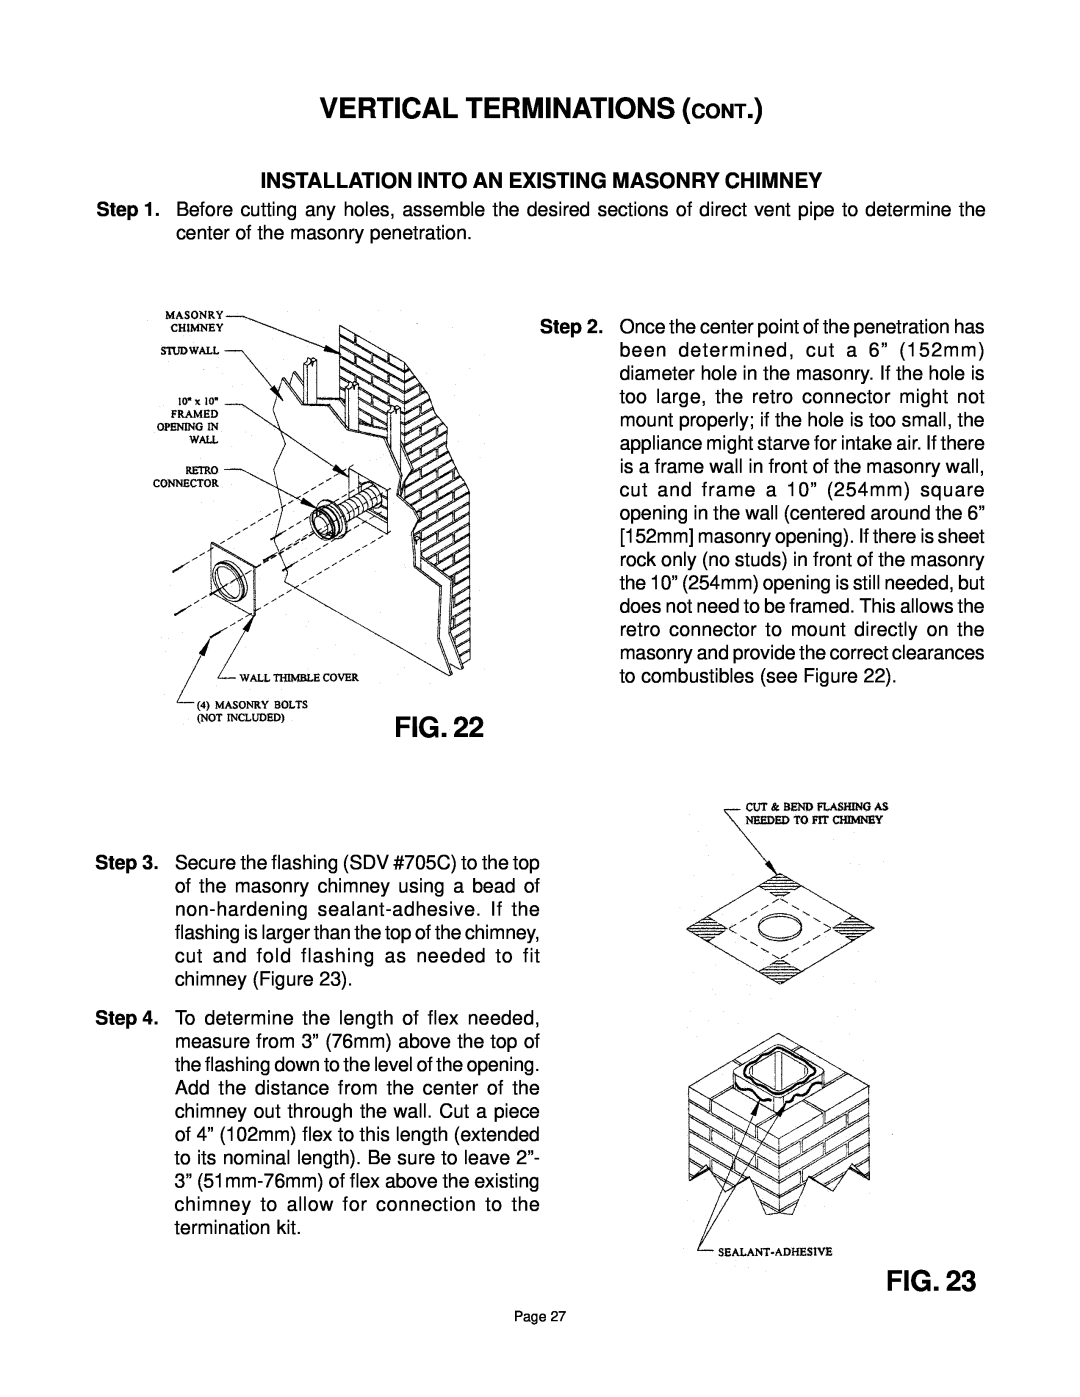 Quadra-Fire DV-40 manual Installation Into An Existing Masonry Chimney, Vertical Terminations Cont 